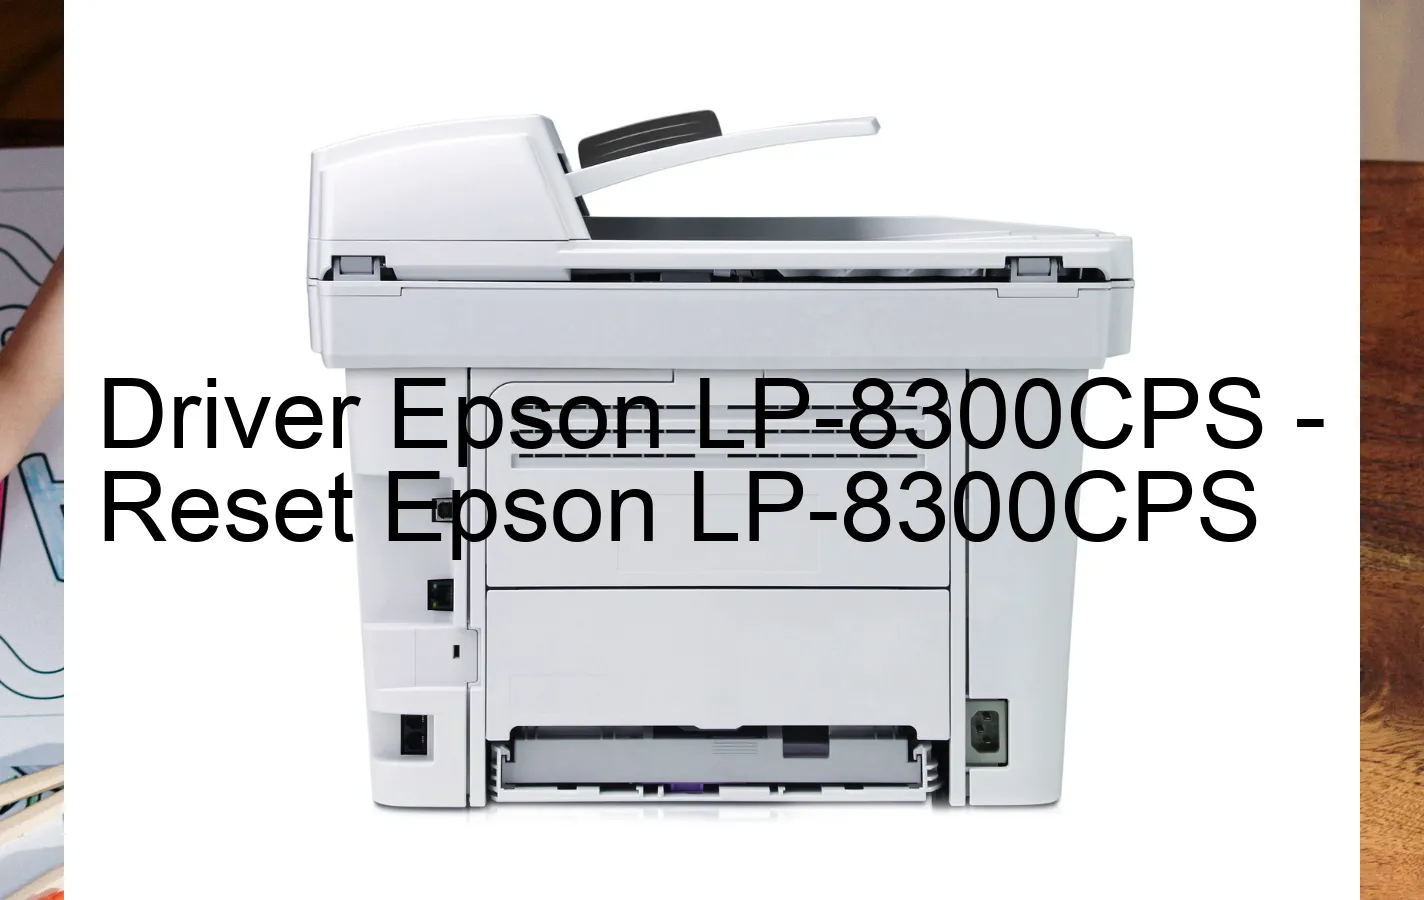 Epson LP-8300CPSのドライバー、Epson LP-8300CPSのリセットソフトウェア